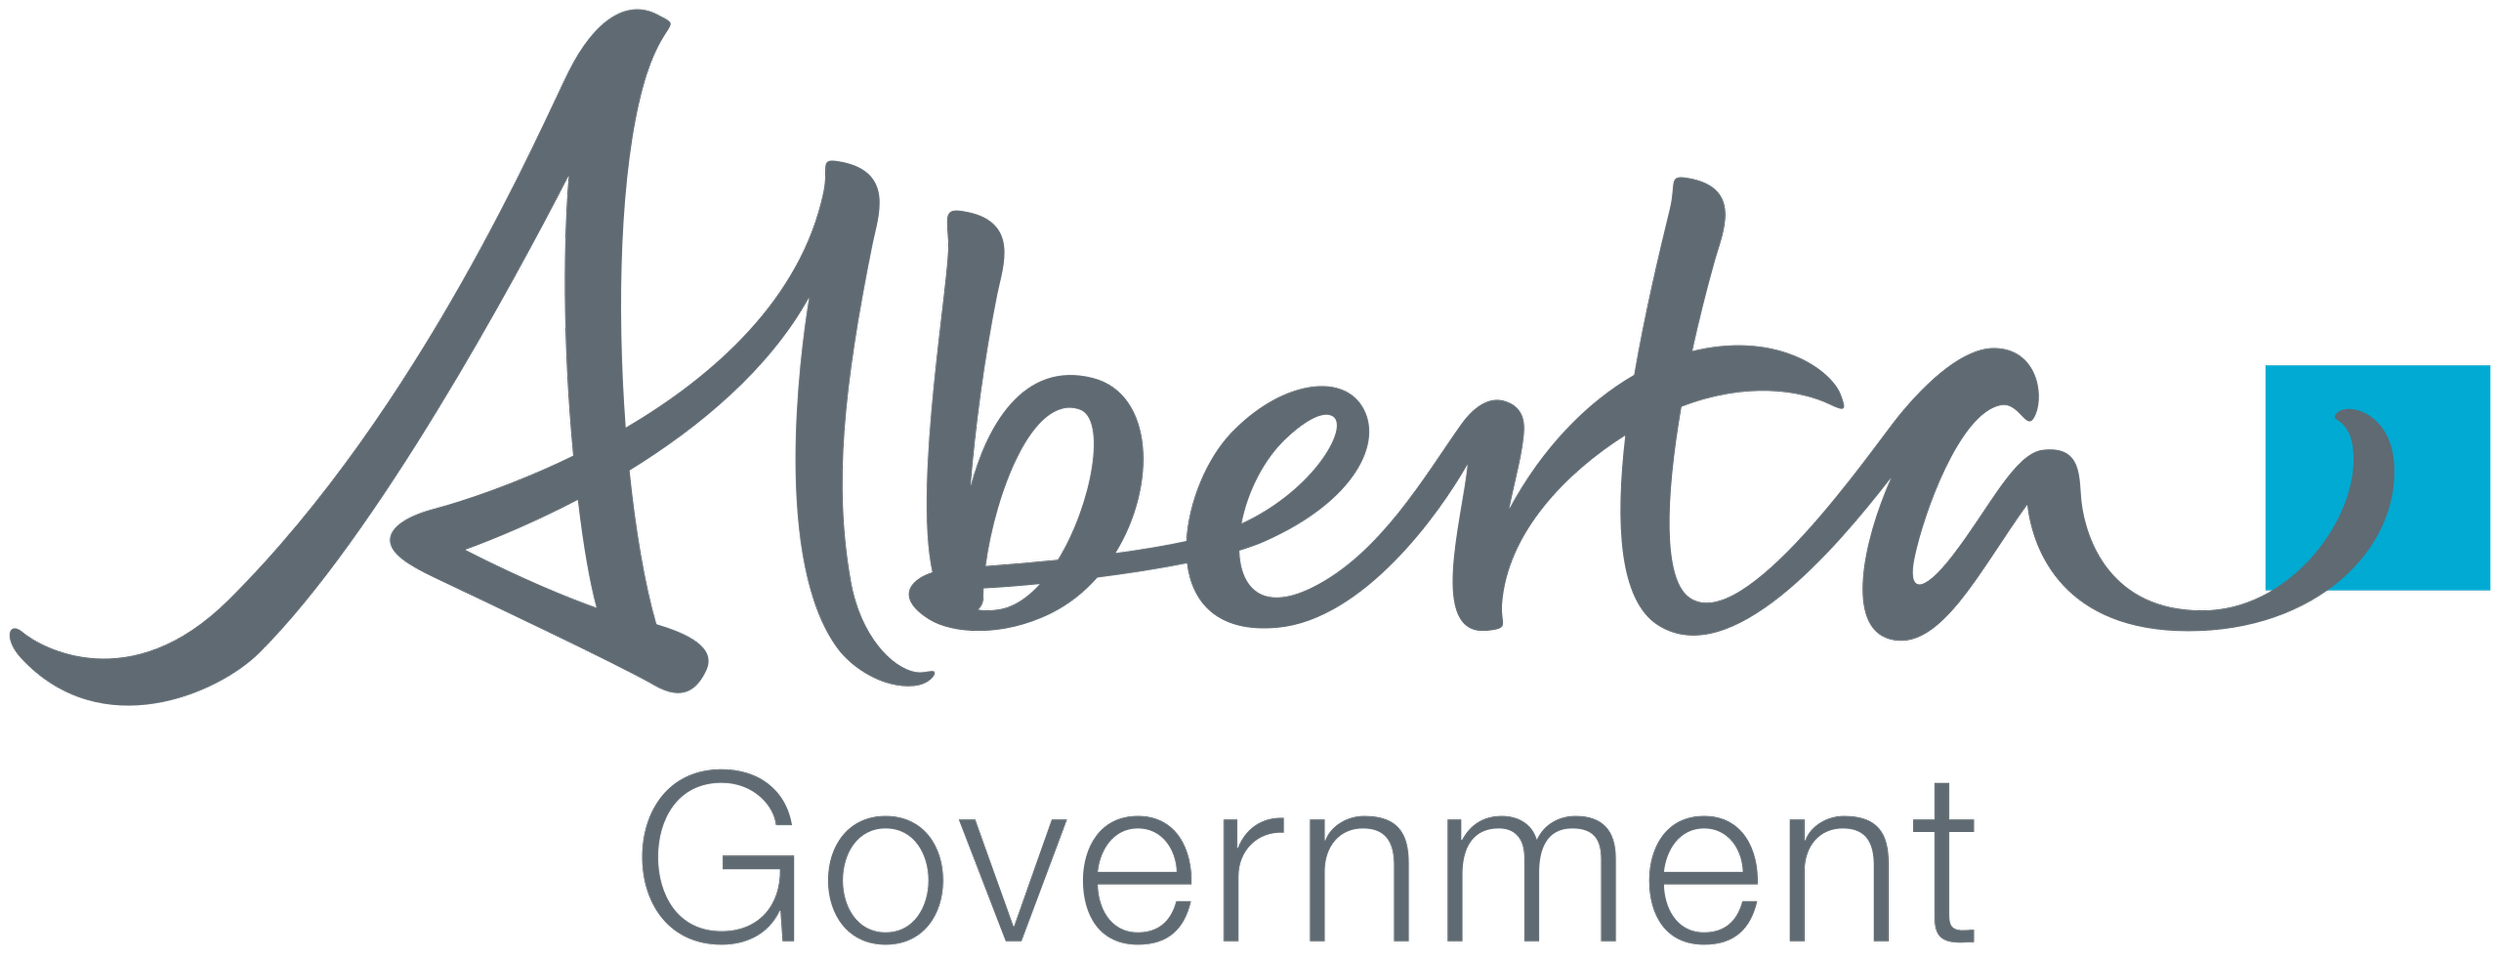 Alberta-government-logo2.png